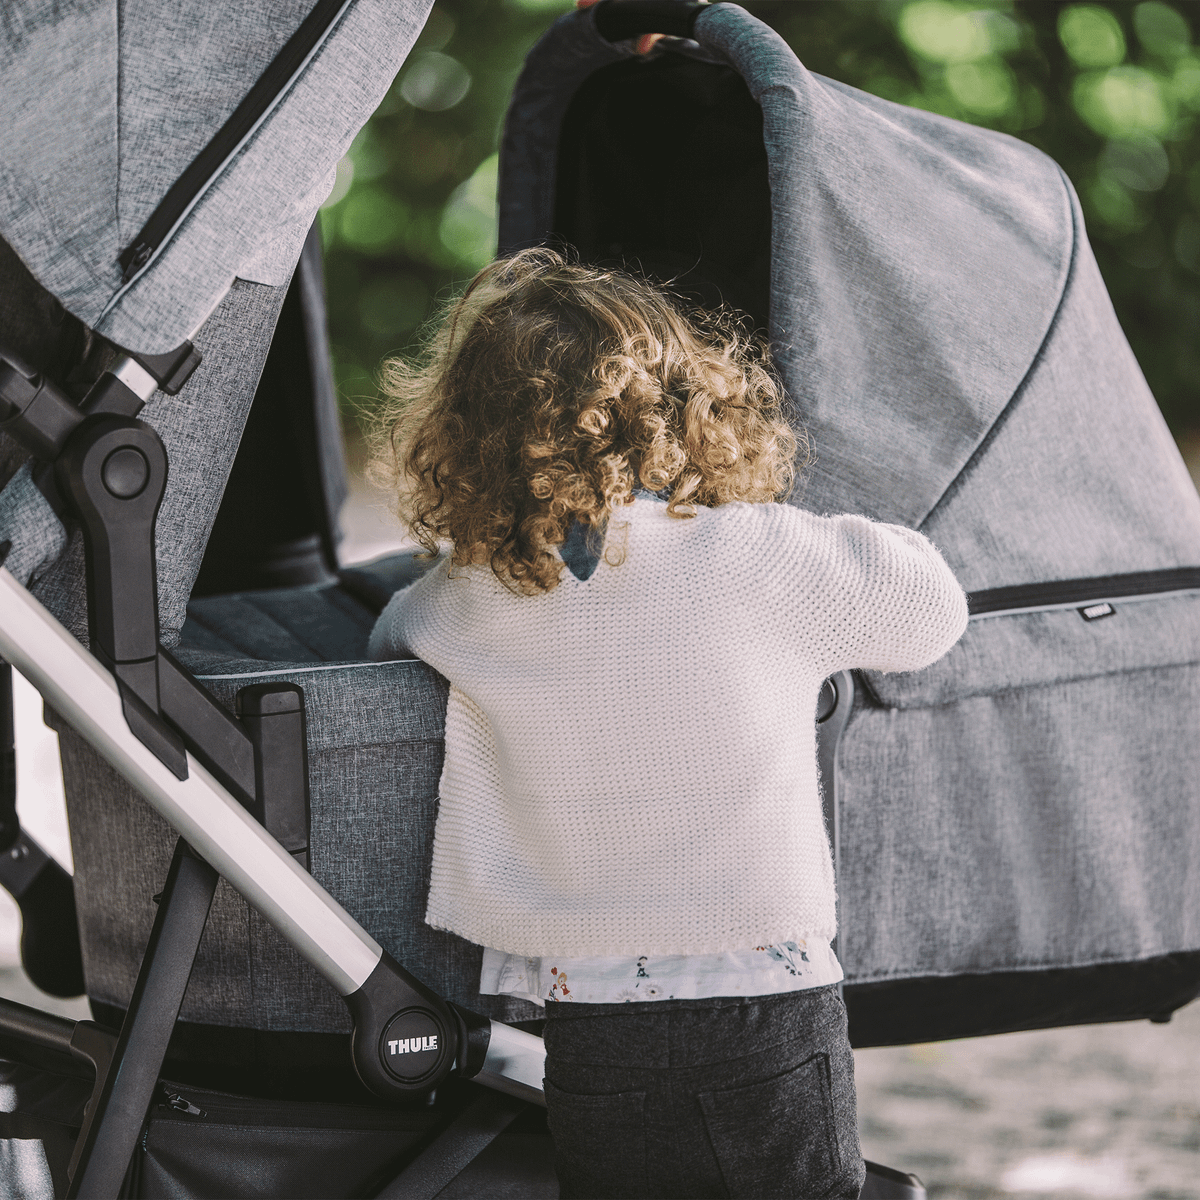 A child peers inside the gray Thule Sleek Bassinet on the Thule Sleek double stroller.